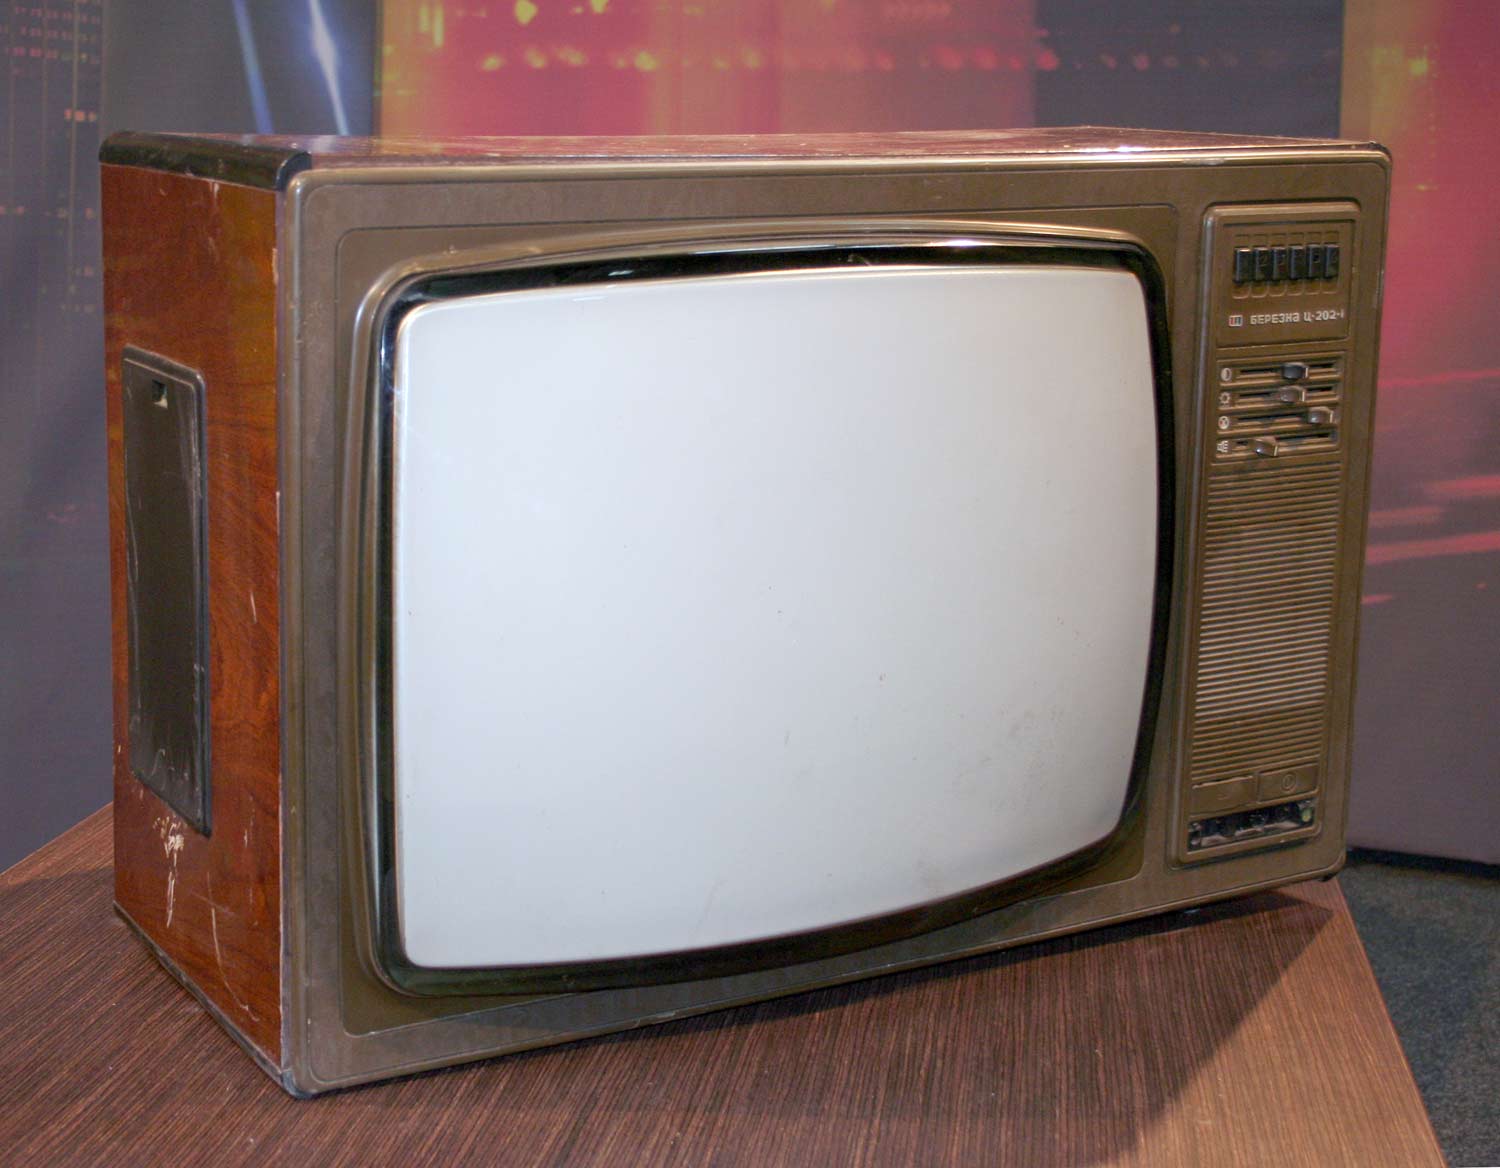 Первые советские телевизоры. Телевизор Березка СССР 202-2. Телевизор темп ц-280д. Цветной телевизор электрон 714. Телевизор Березка 1990.